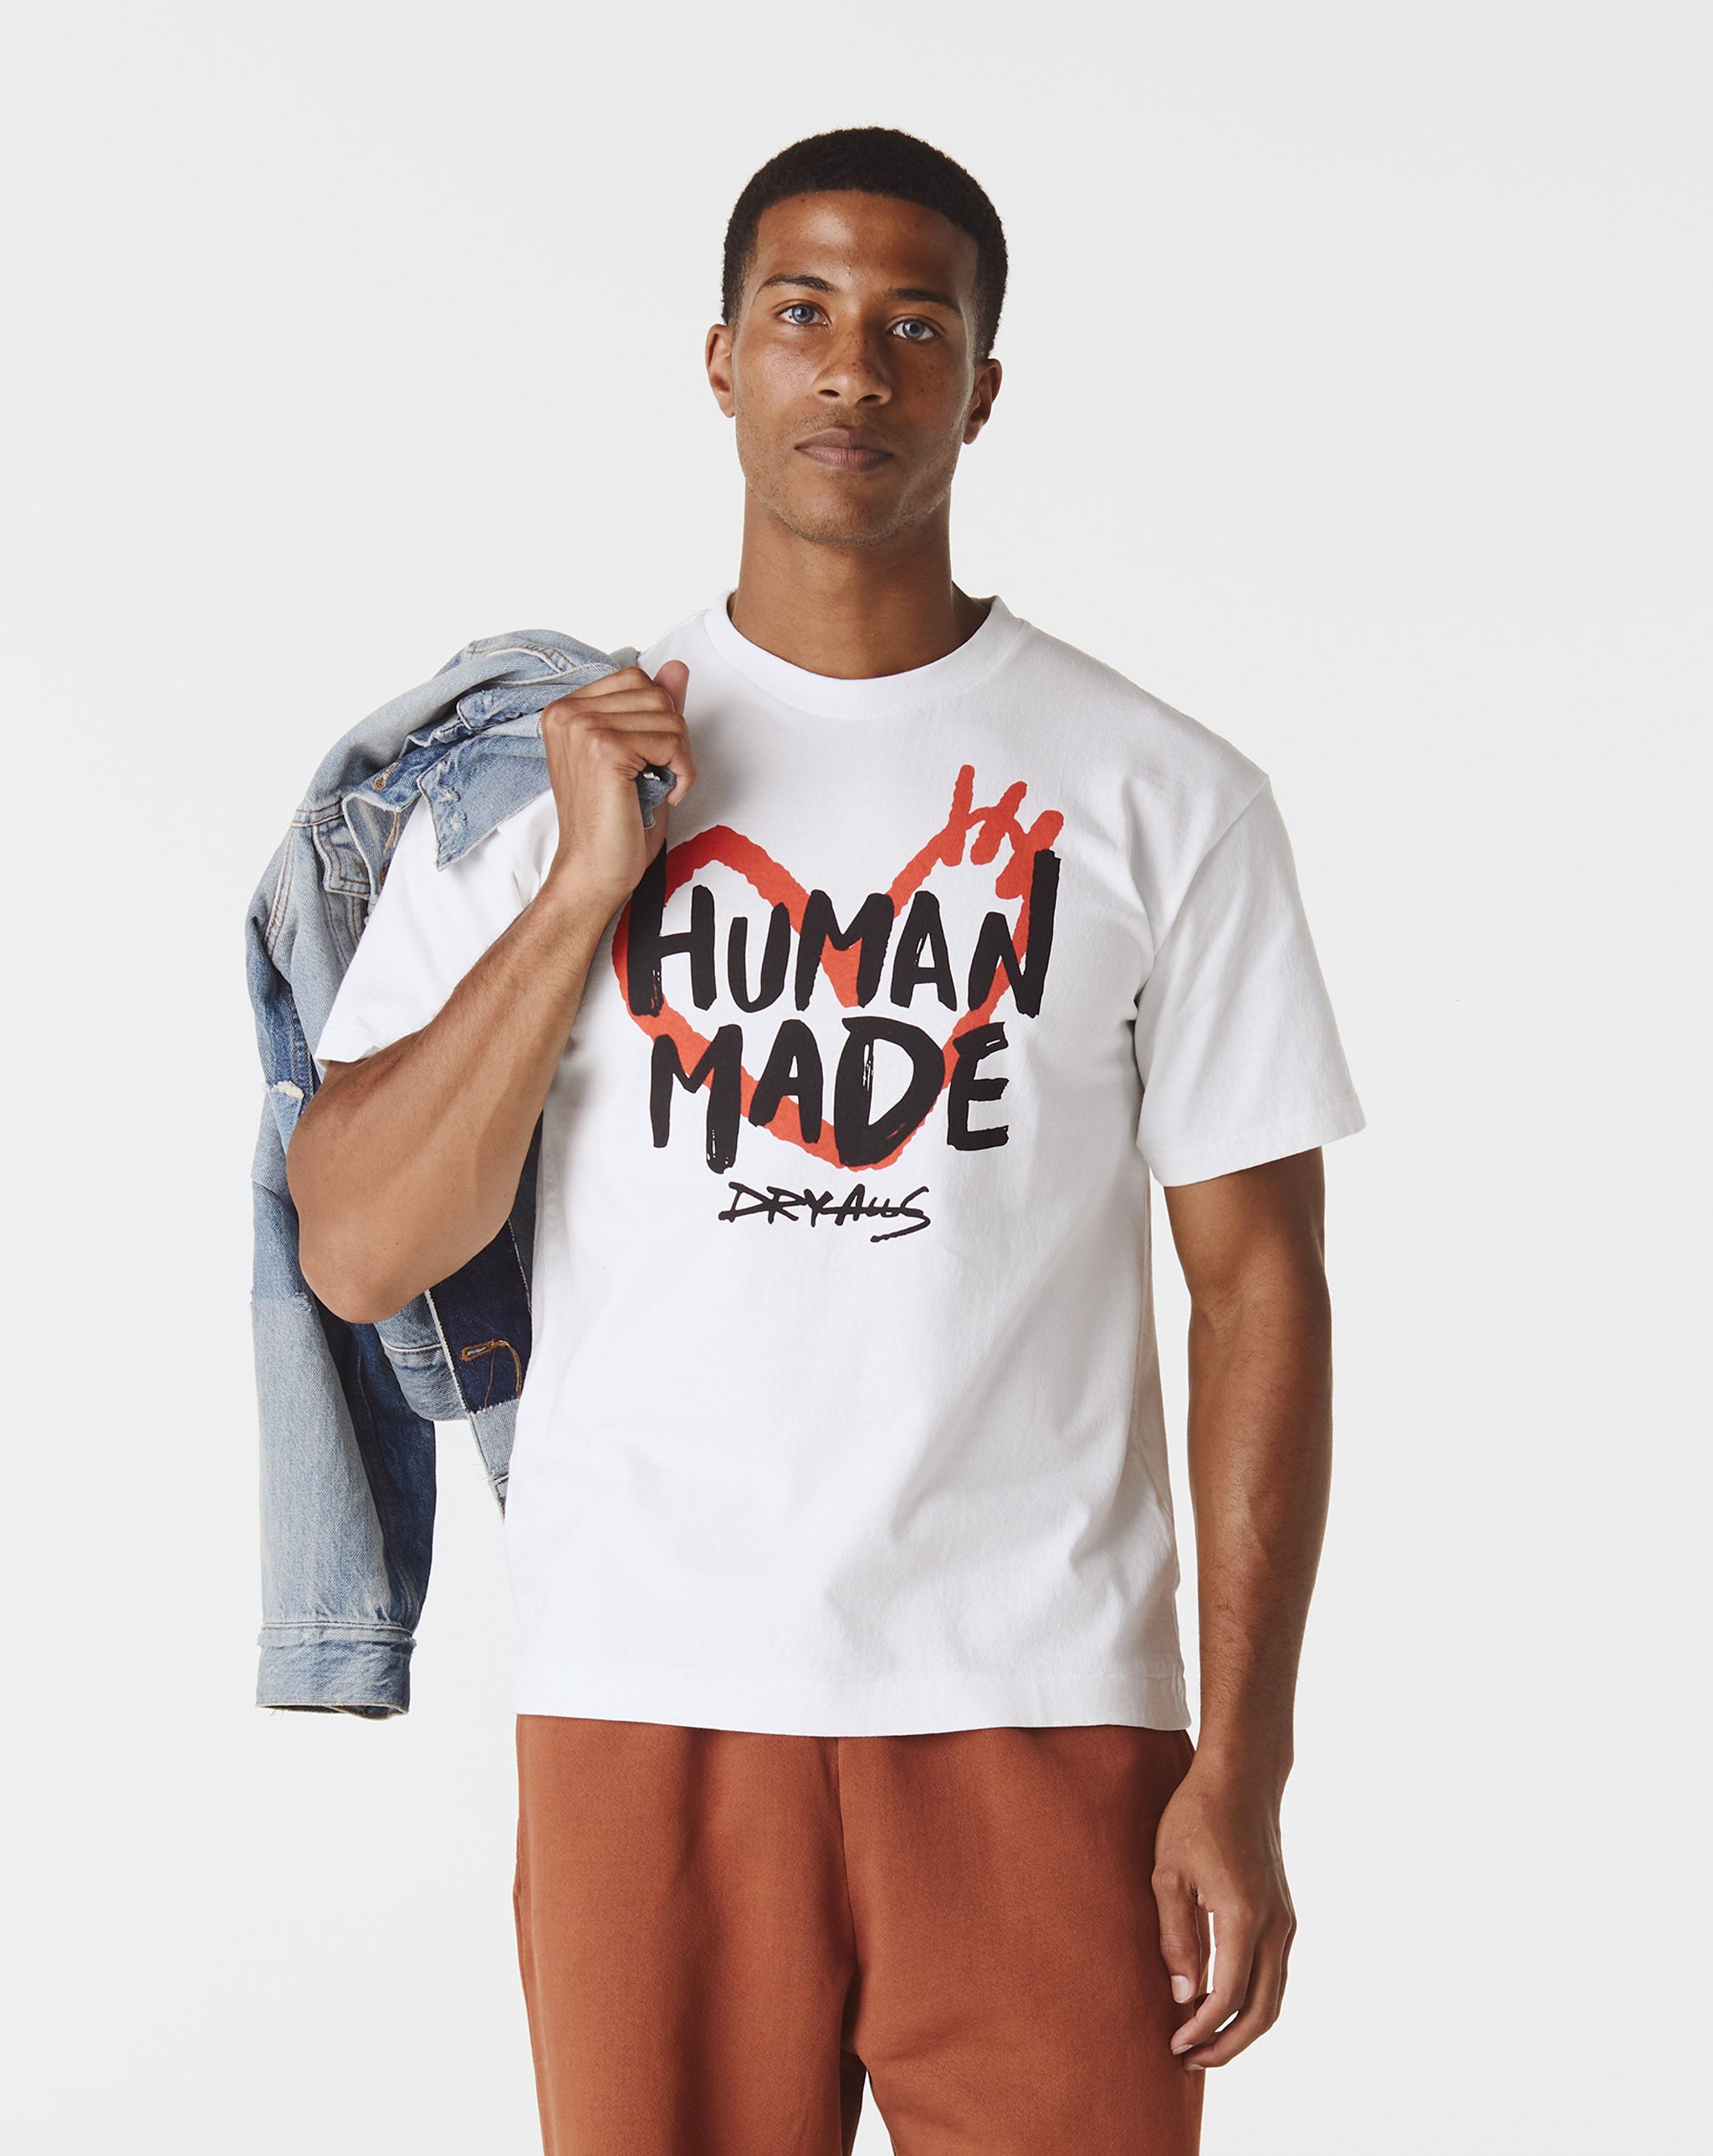 Human Made Graphic T-Shirt  - XHIBITION